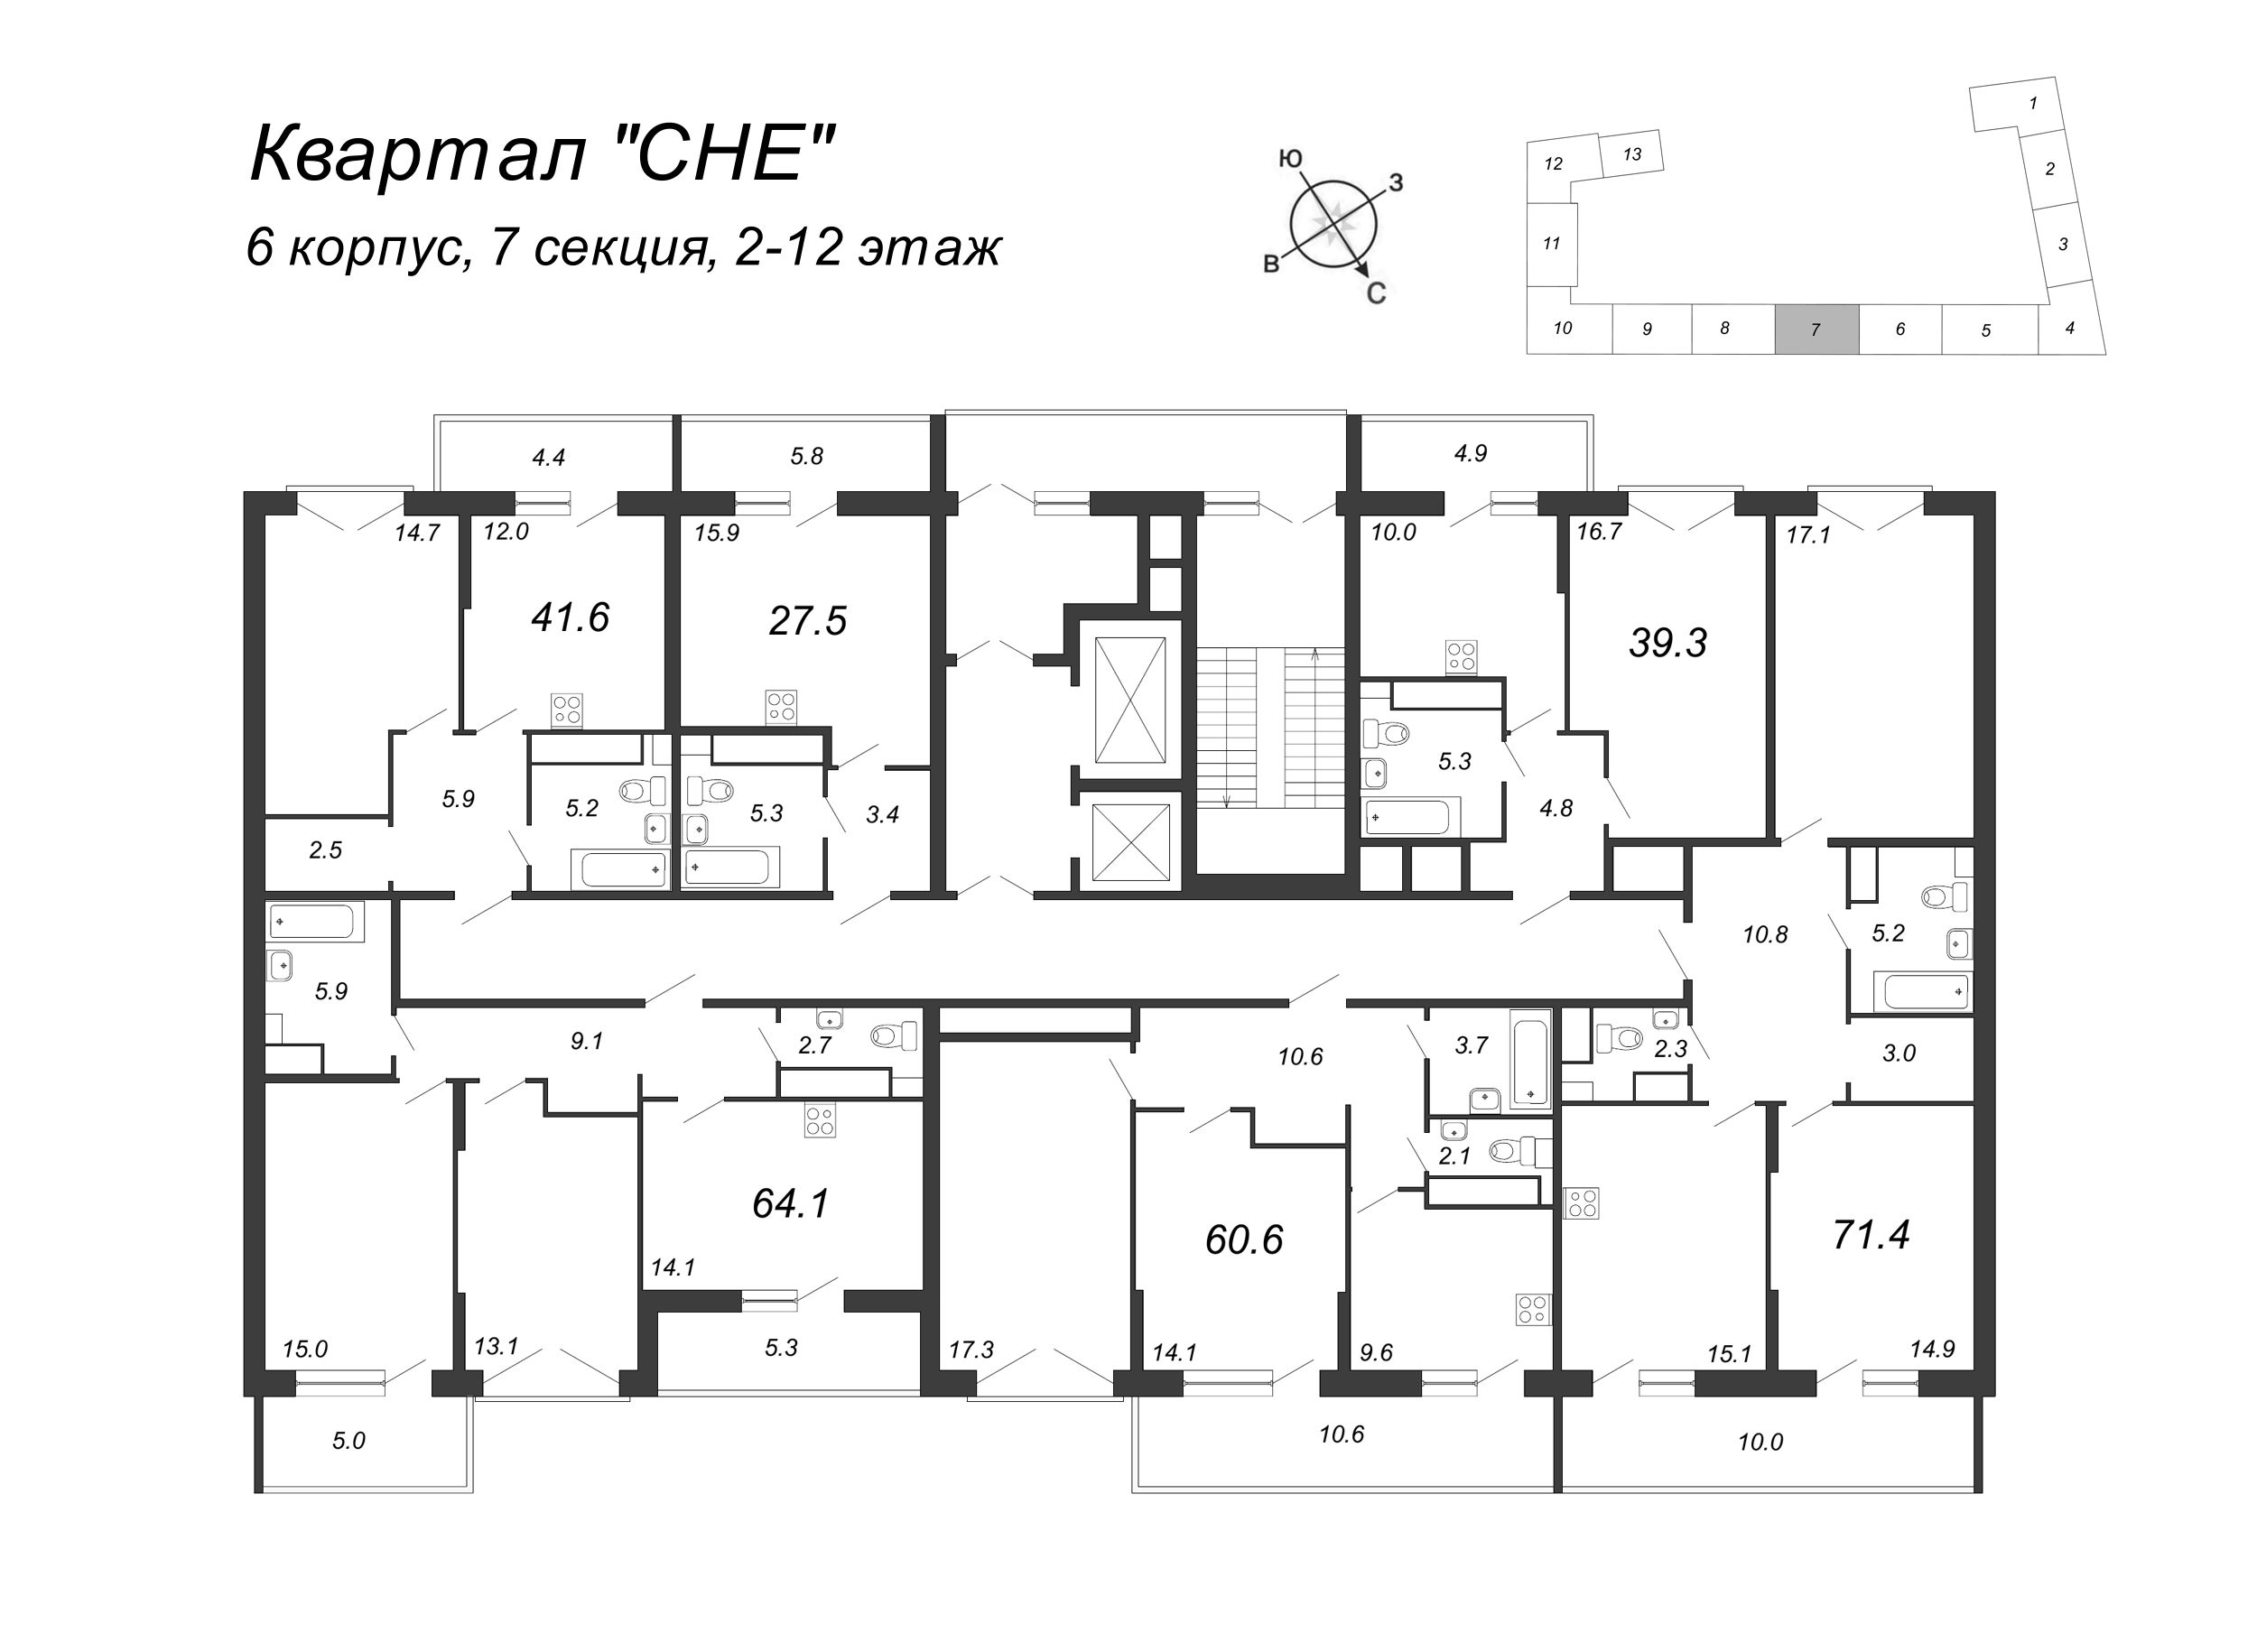 2-комнатная квартира, 61.3 м² в ЖК "Квартал Che" - планировка этажа